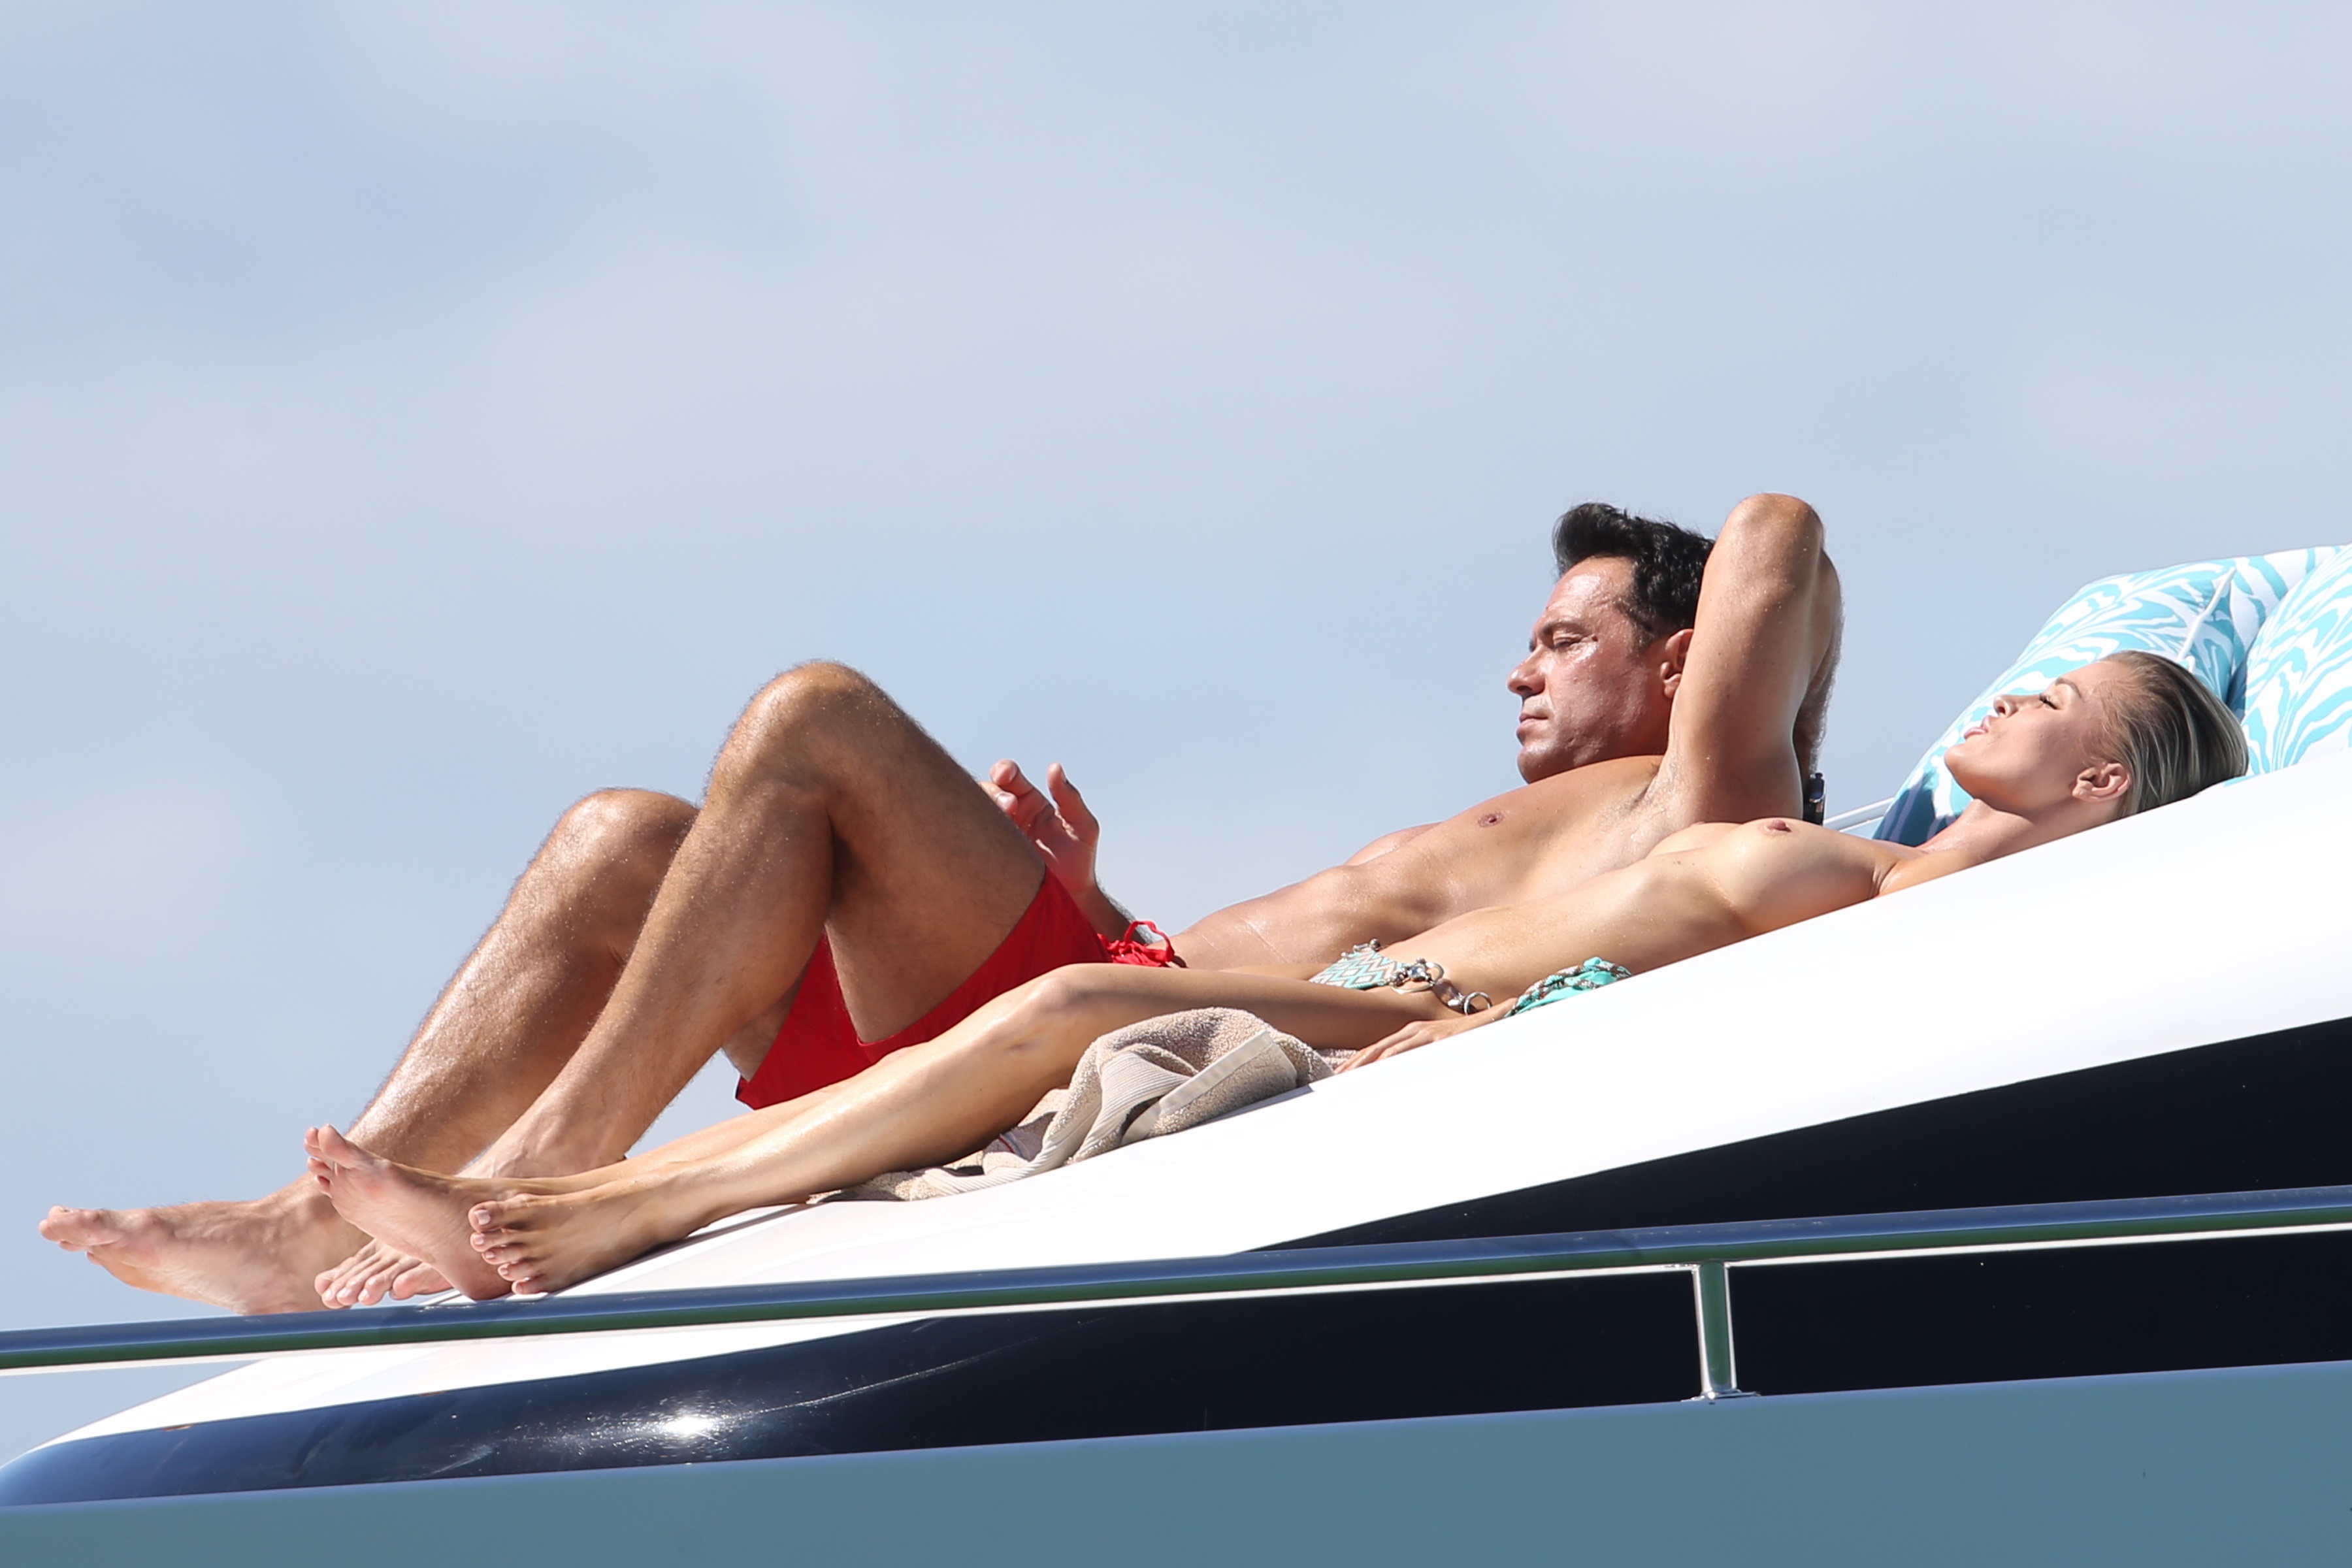 joanna-krupa-topless-on-a-yacht-in-miami-02.jpg